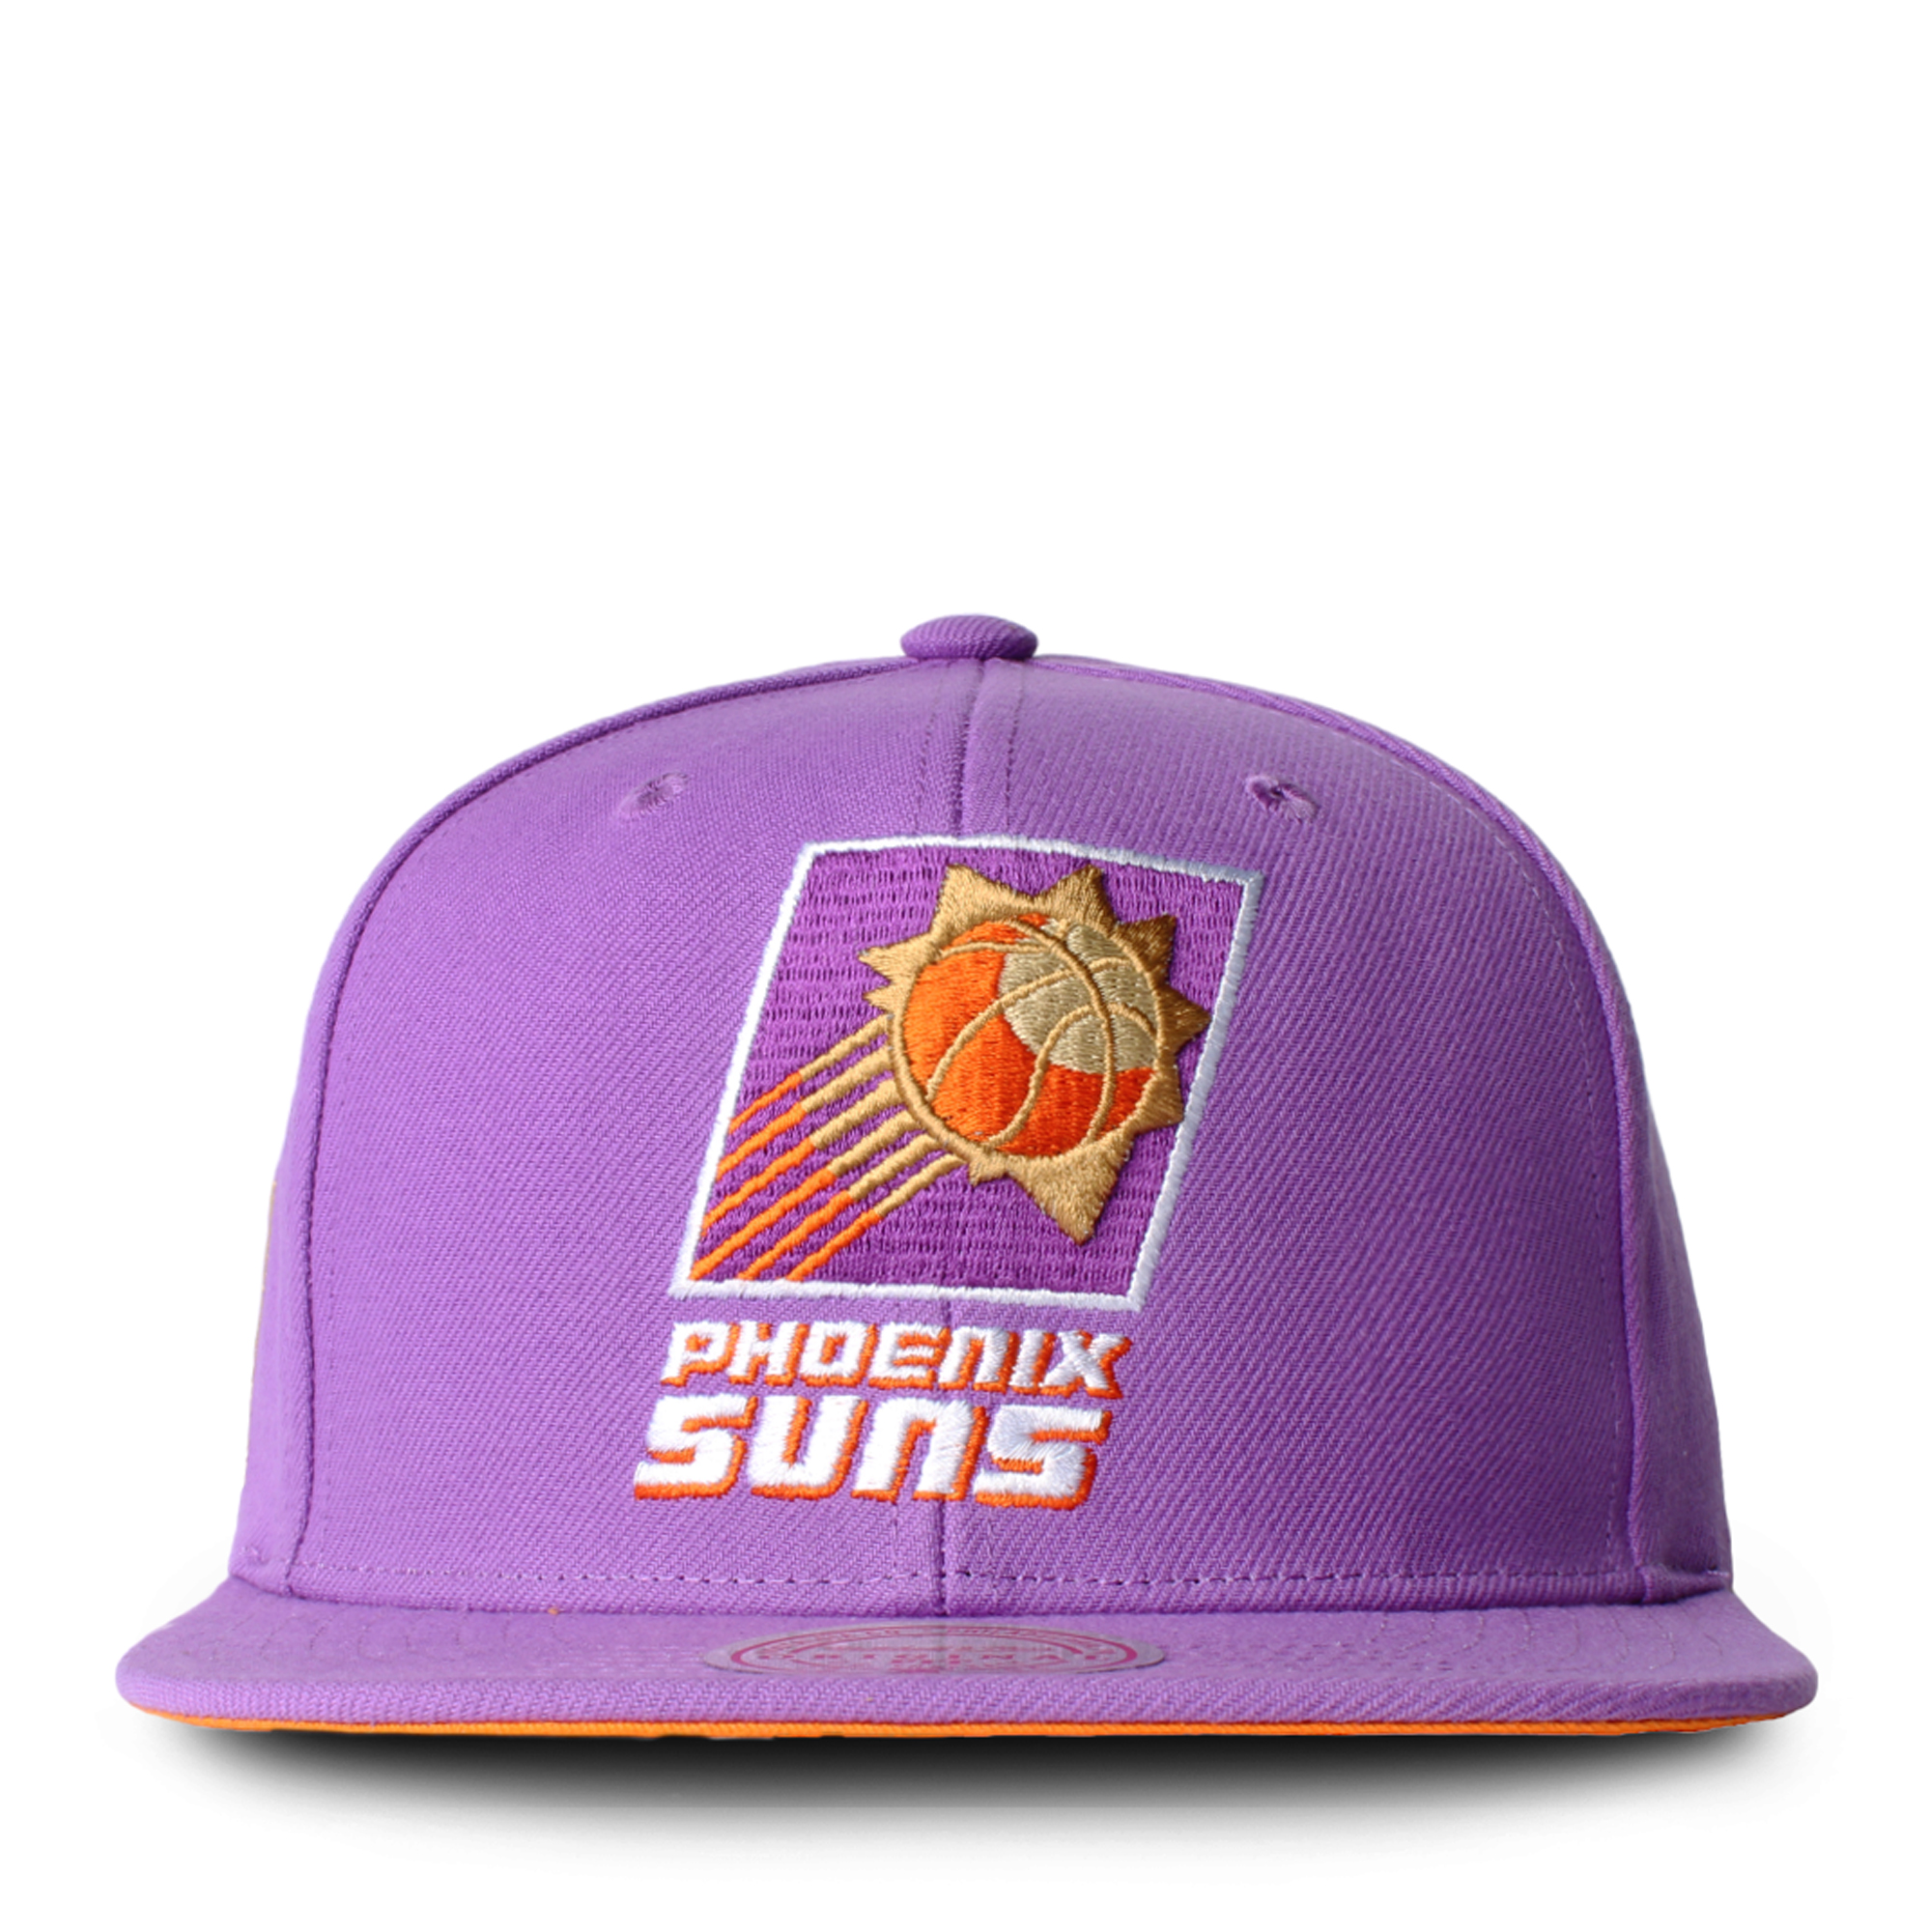 Mitchell and Ness Phoenix Suns Pastel Fitted Hat Light Purple